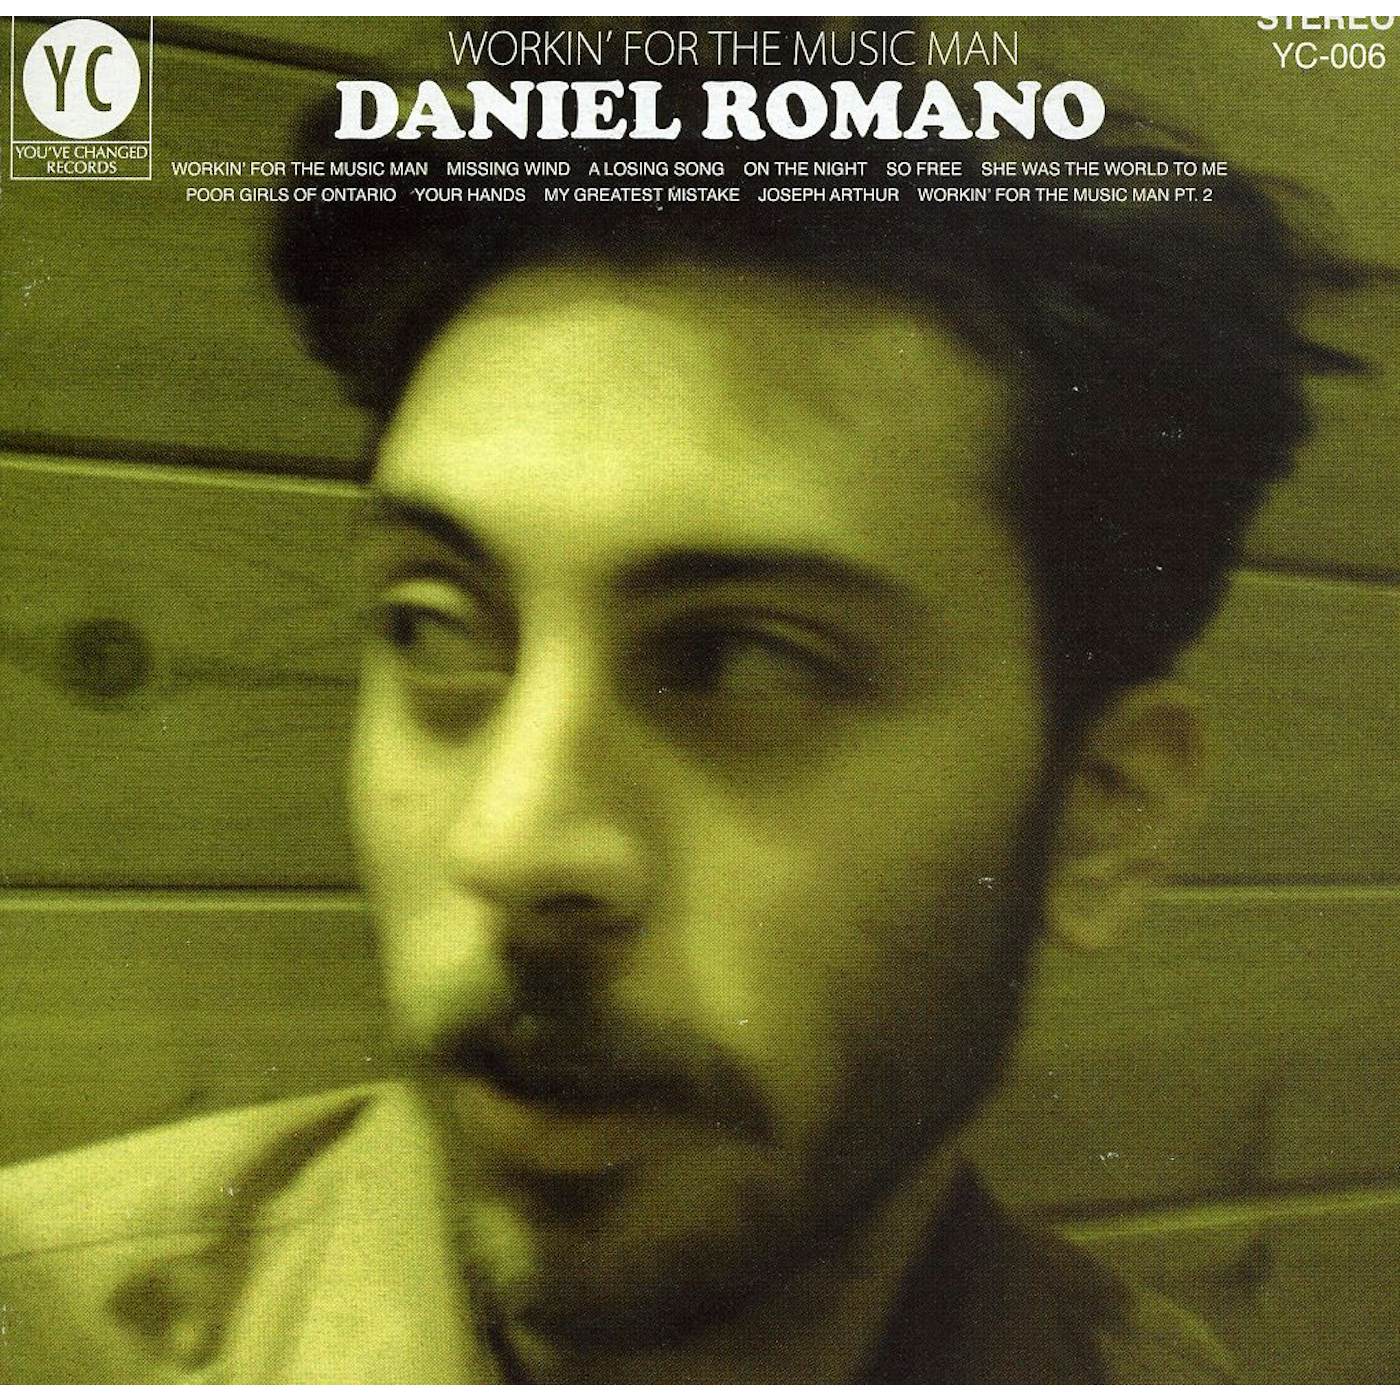 Daniel Romano WORKIN' FOR THE MUSIC MAN CD